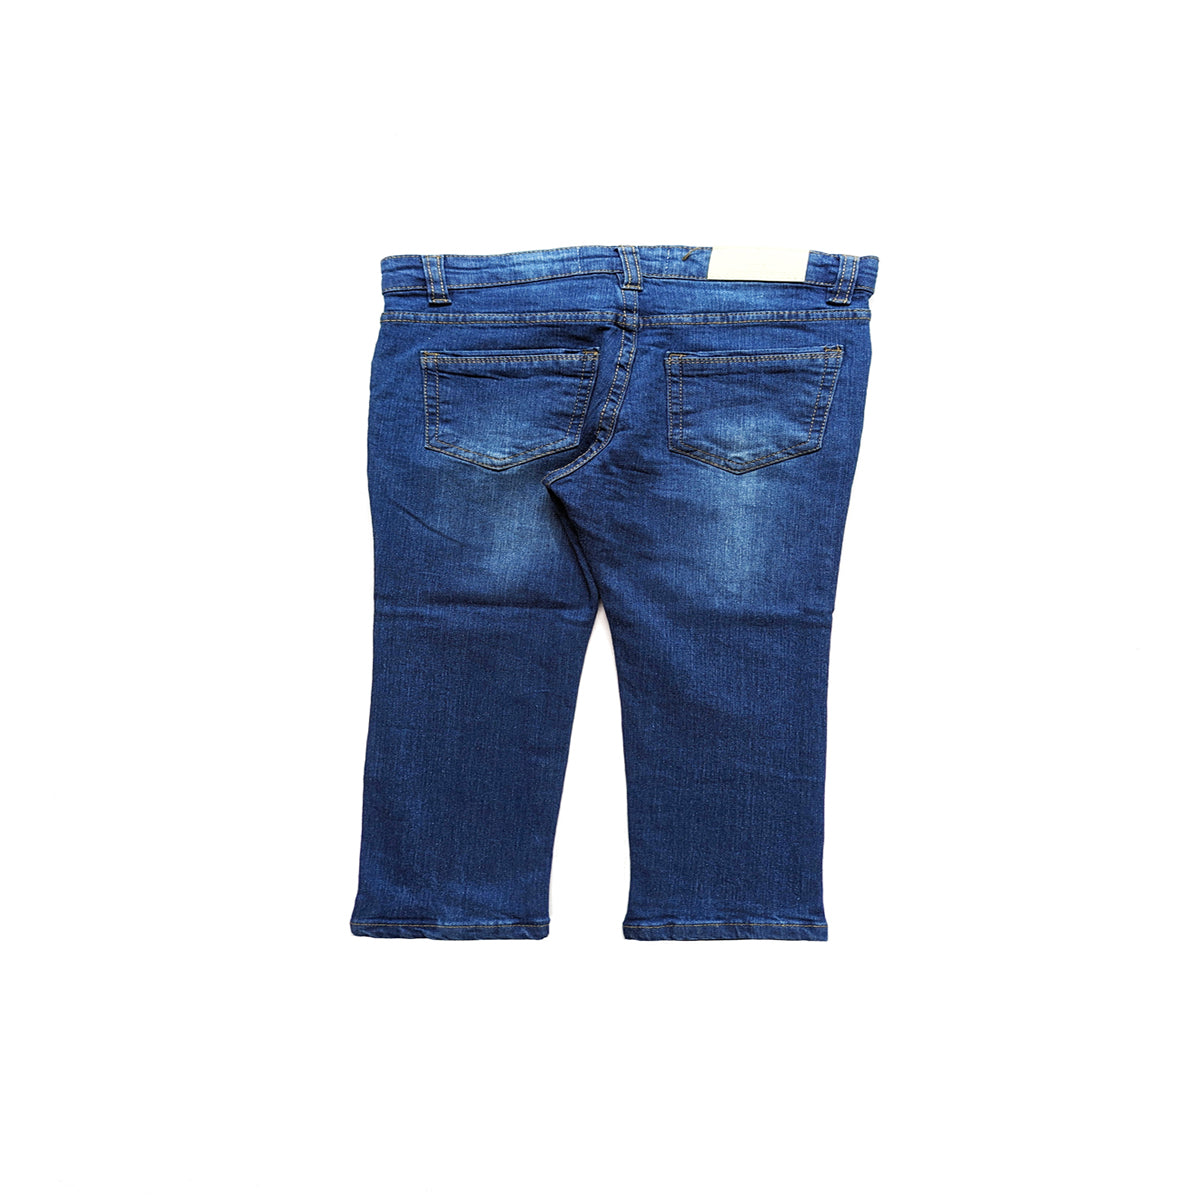 Brand Expo Premium Quality Branded Denim Jeans for Boy's